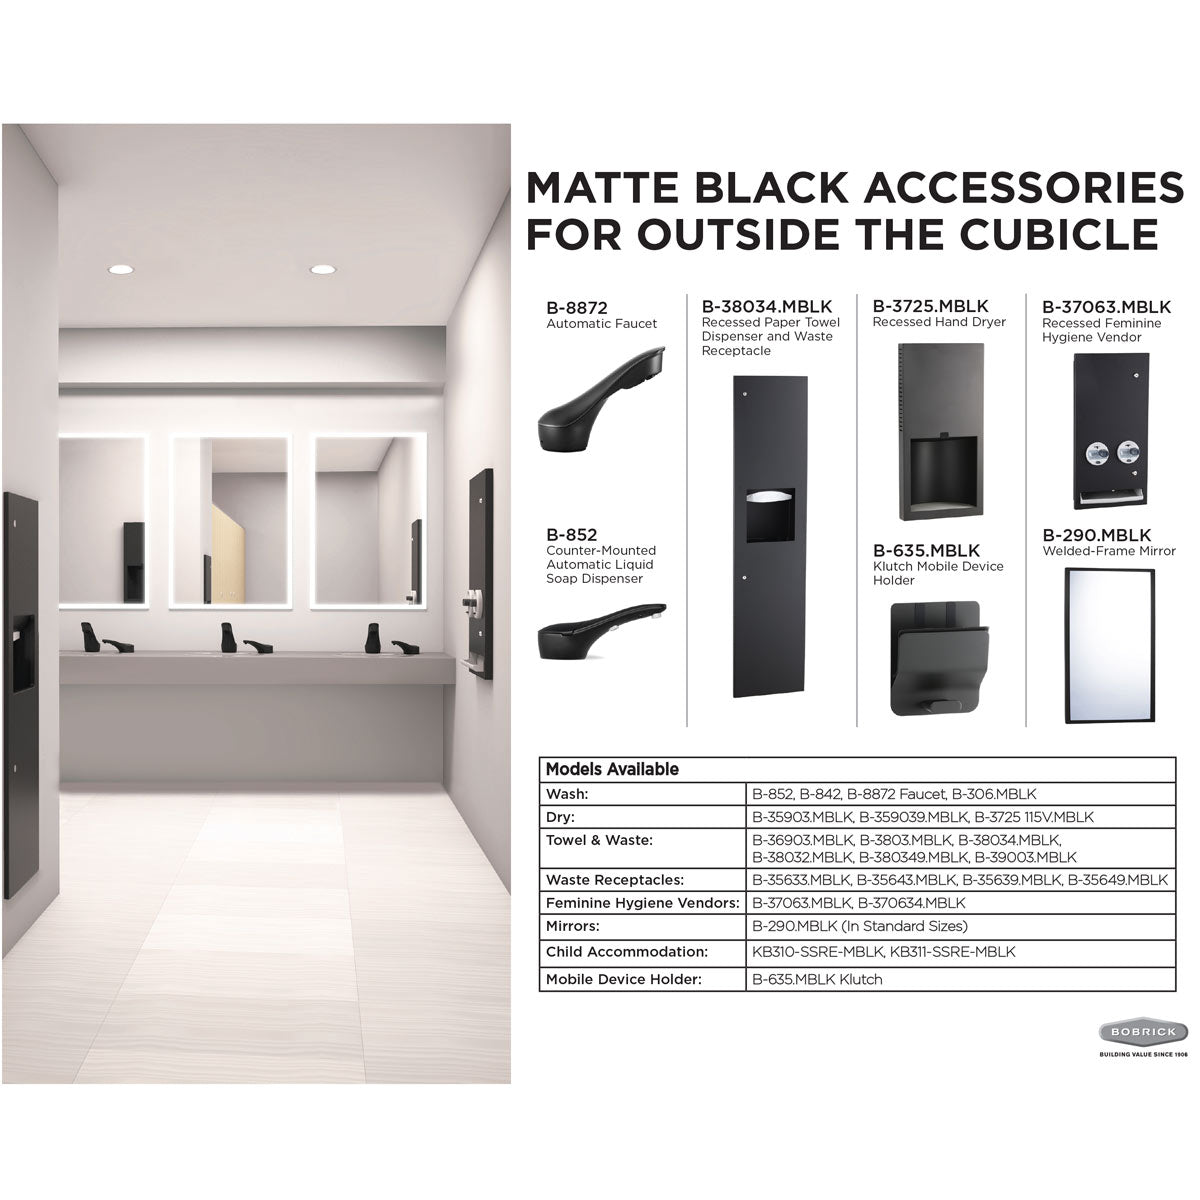 Bobrick Cubicle Collection Toilet Tissue Dispenser & Utility Shelf B-540